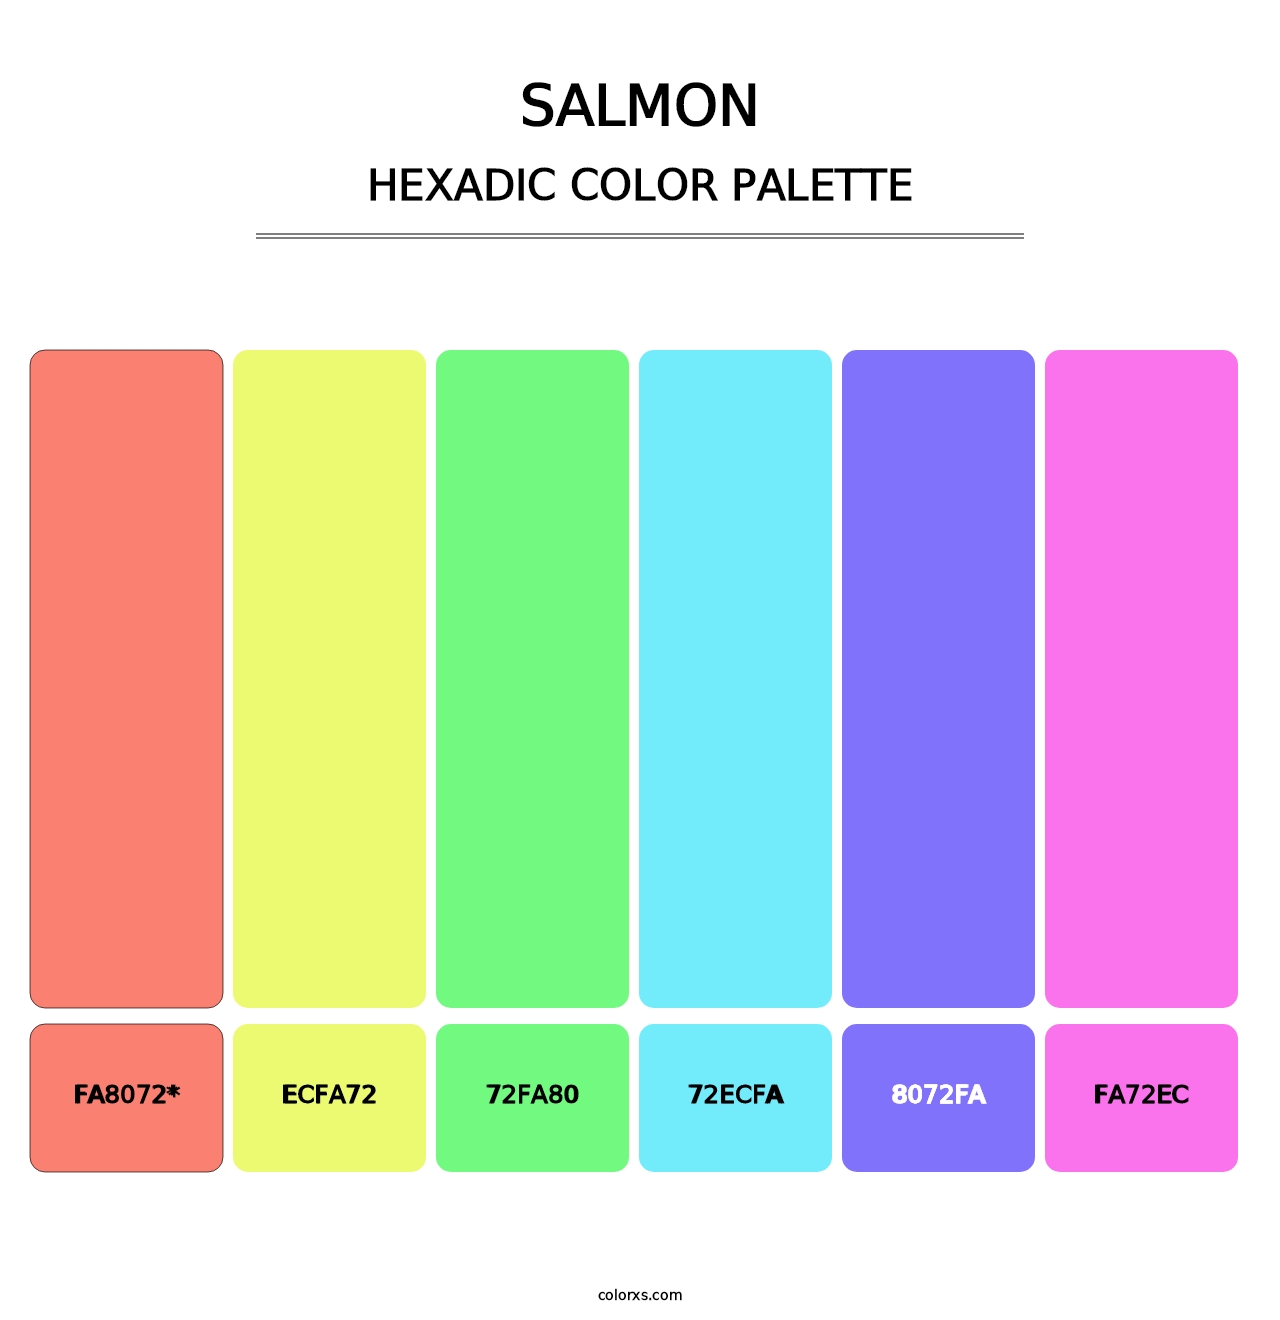 Salmon - Hexadic Color Palette